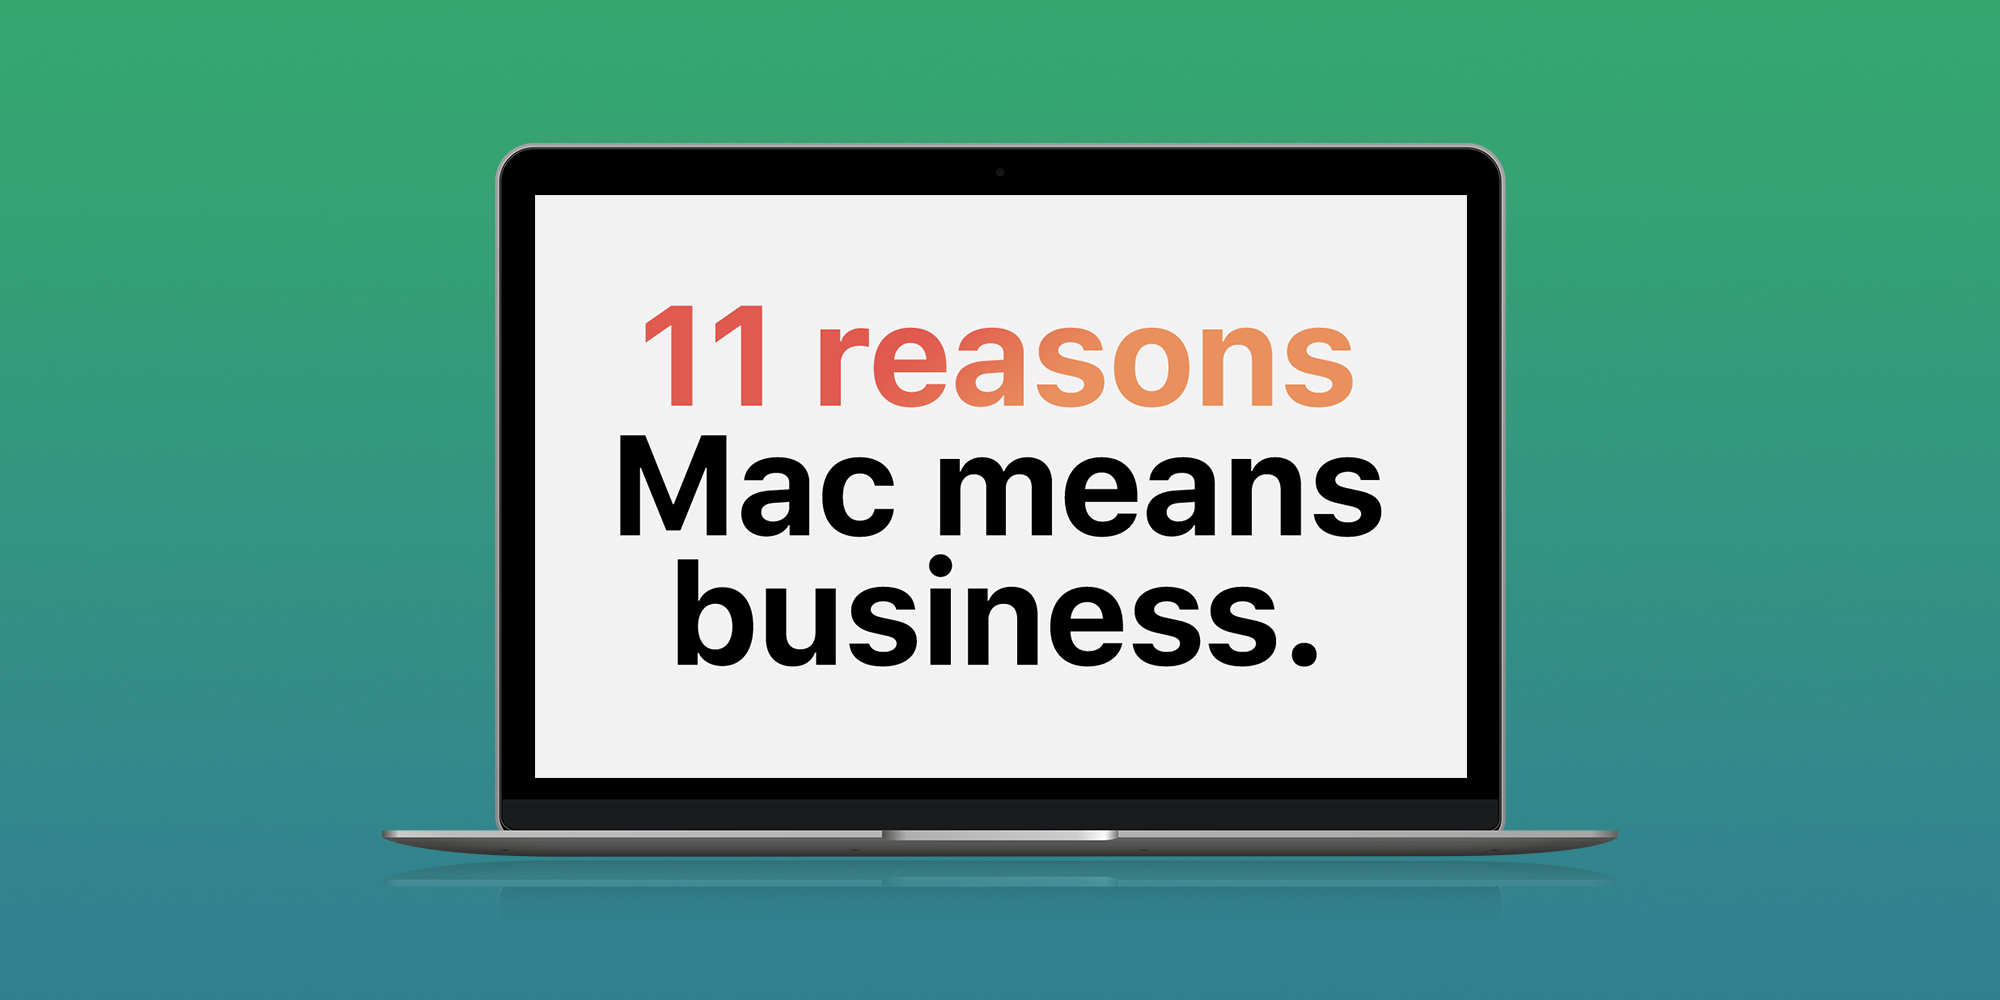 using mac mini server for business